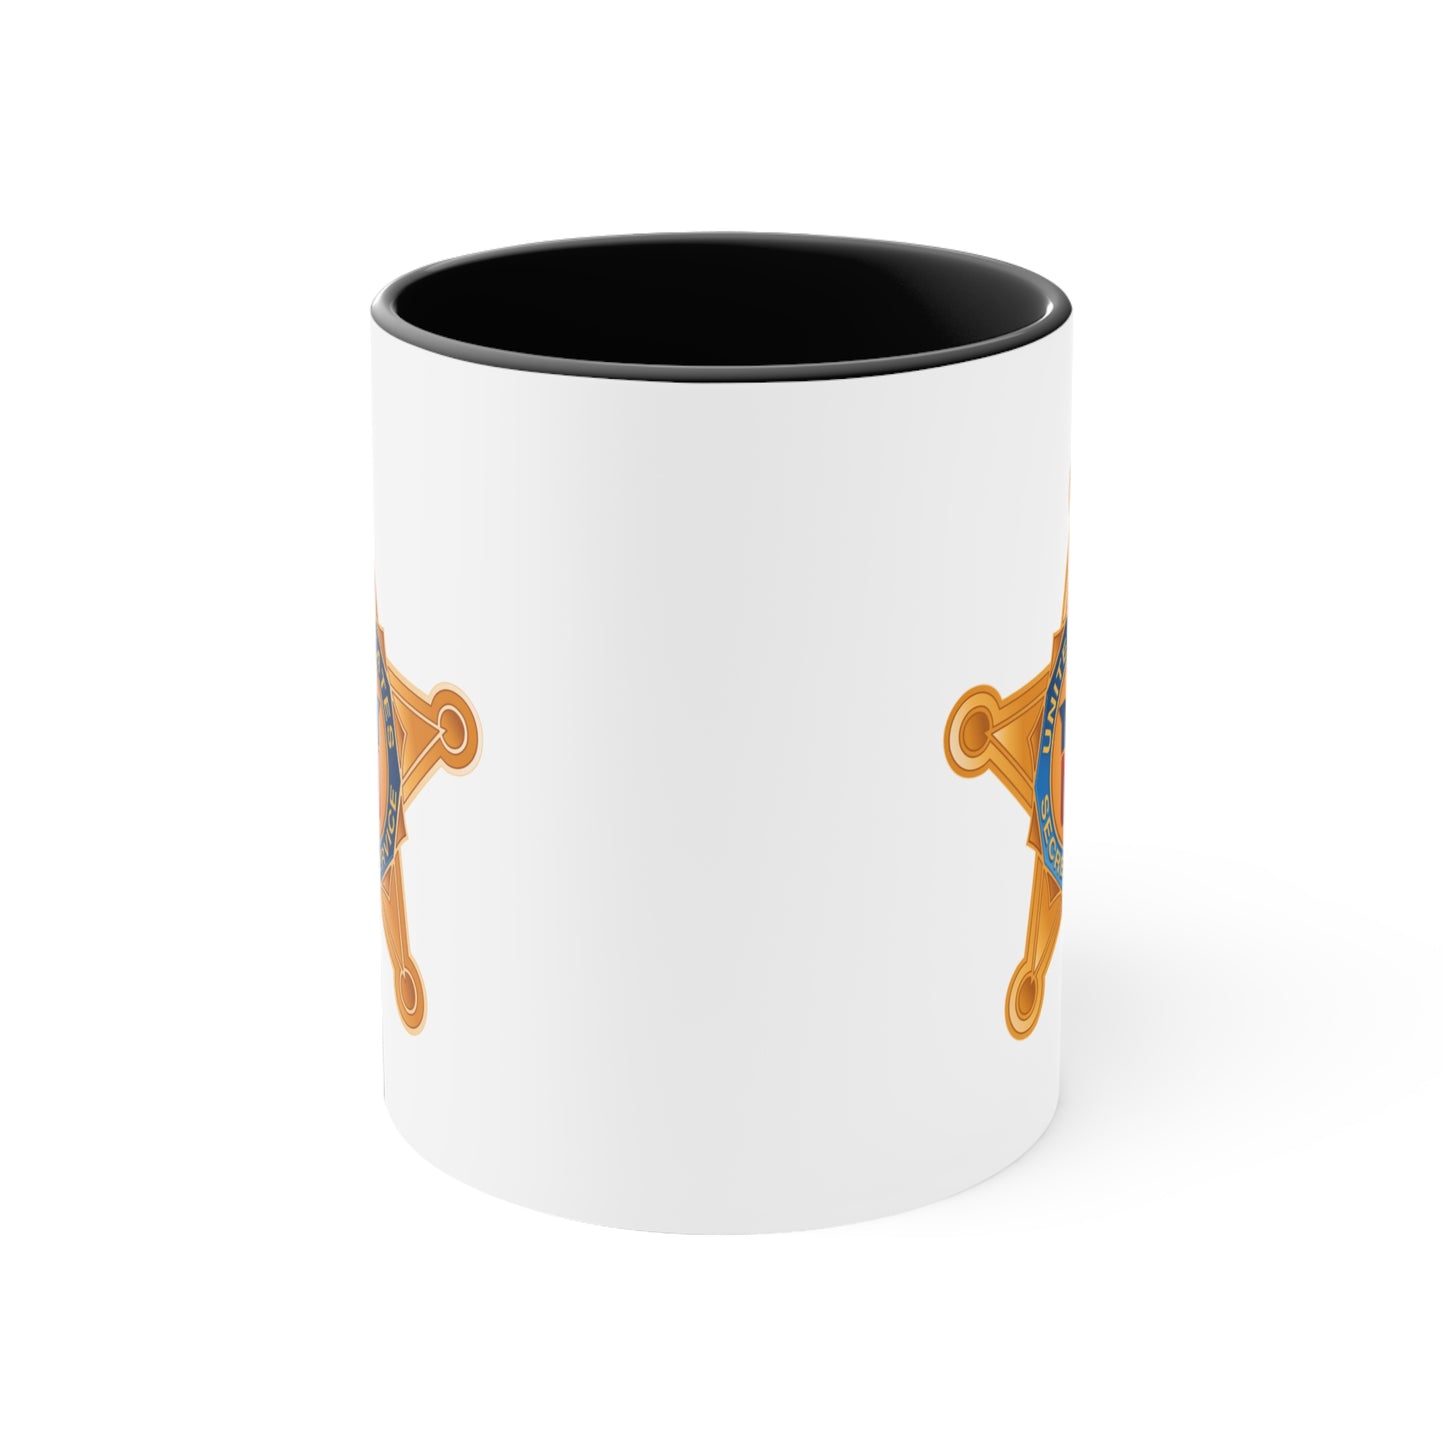 US Secret Service Coffee Mug - Double Sided Black Accent White Ceramic 11oz by TheGlassyLass